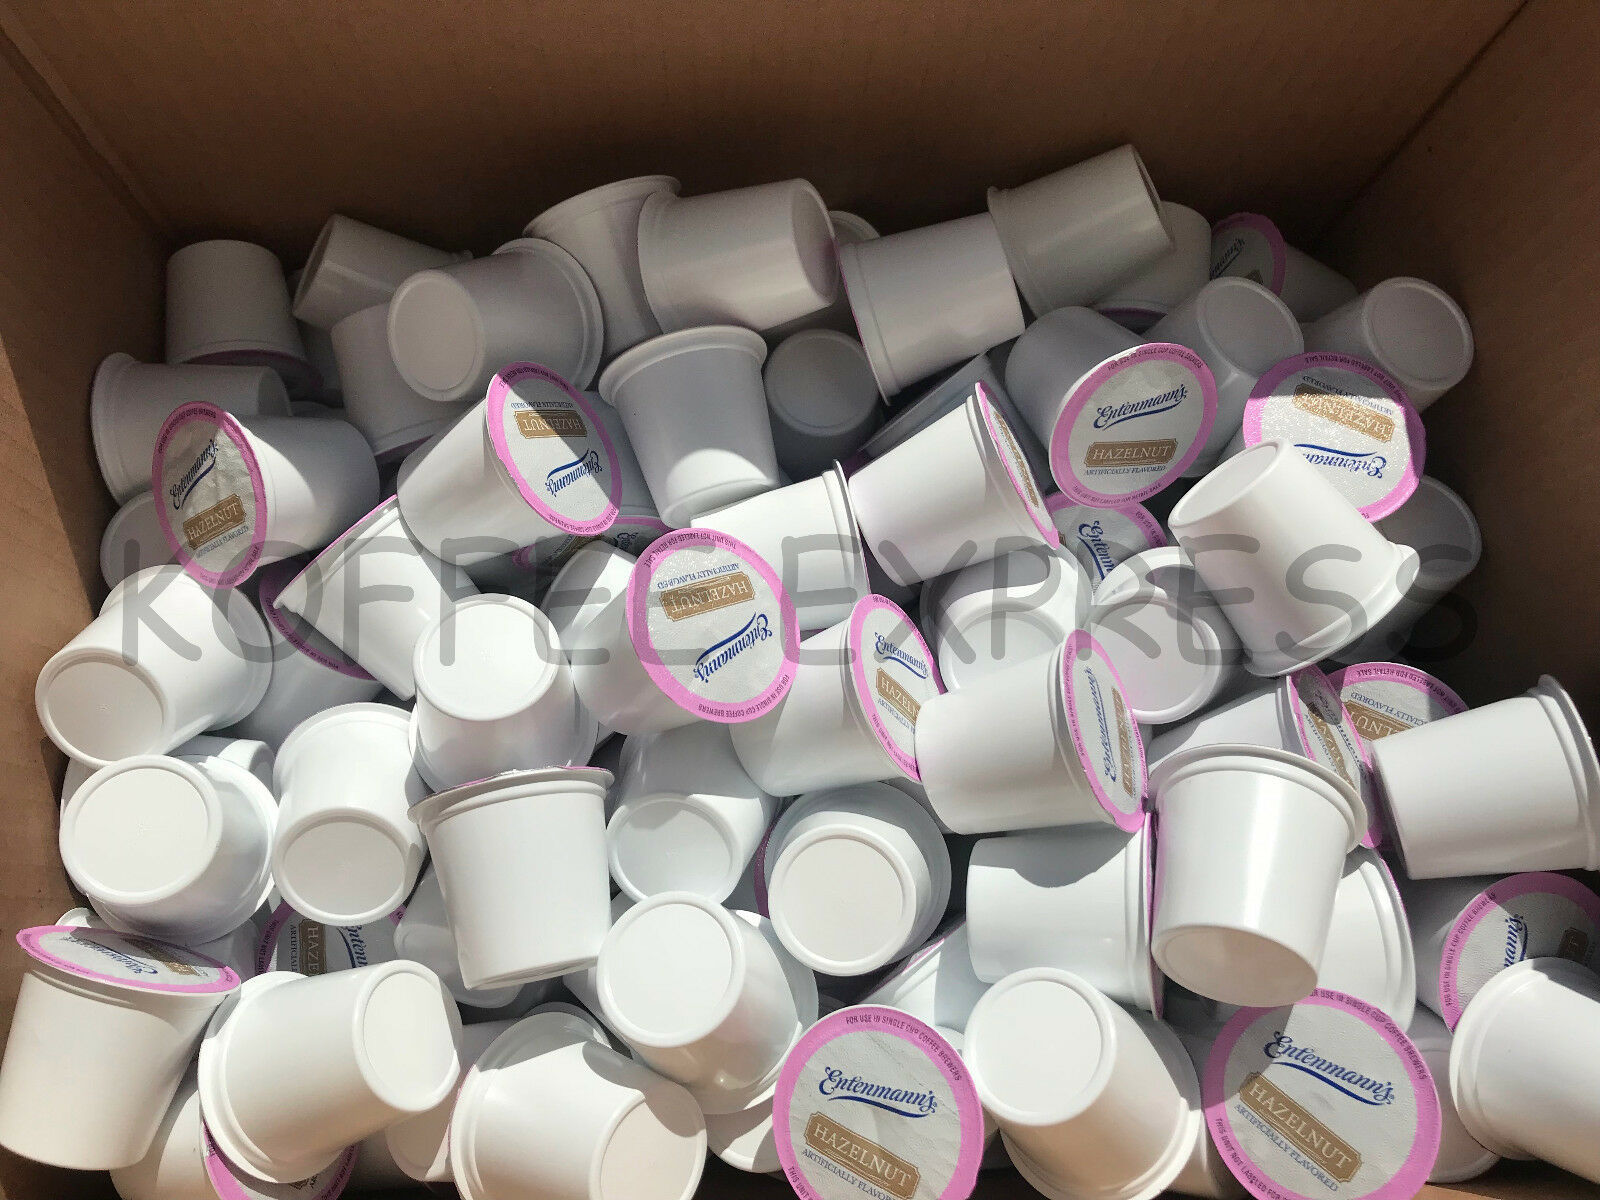 Hazelnut Entenmann's Coffee Single Serve Cups, 100 Count Wholesale prices - $55.00